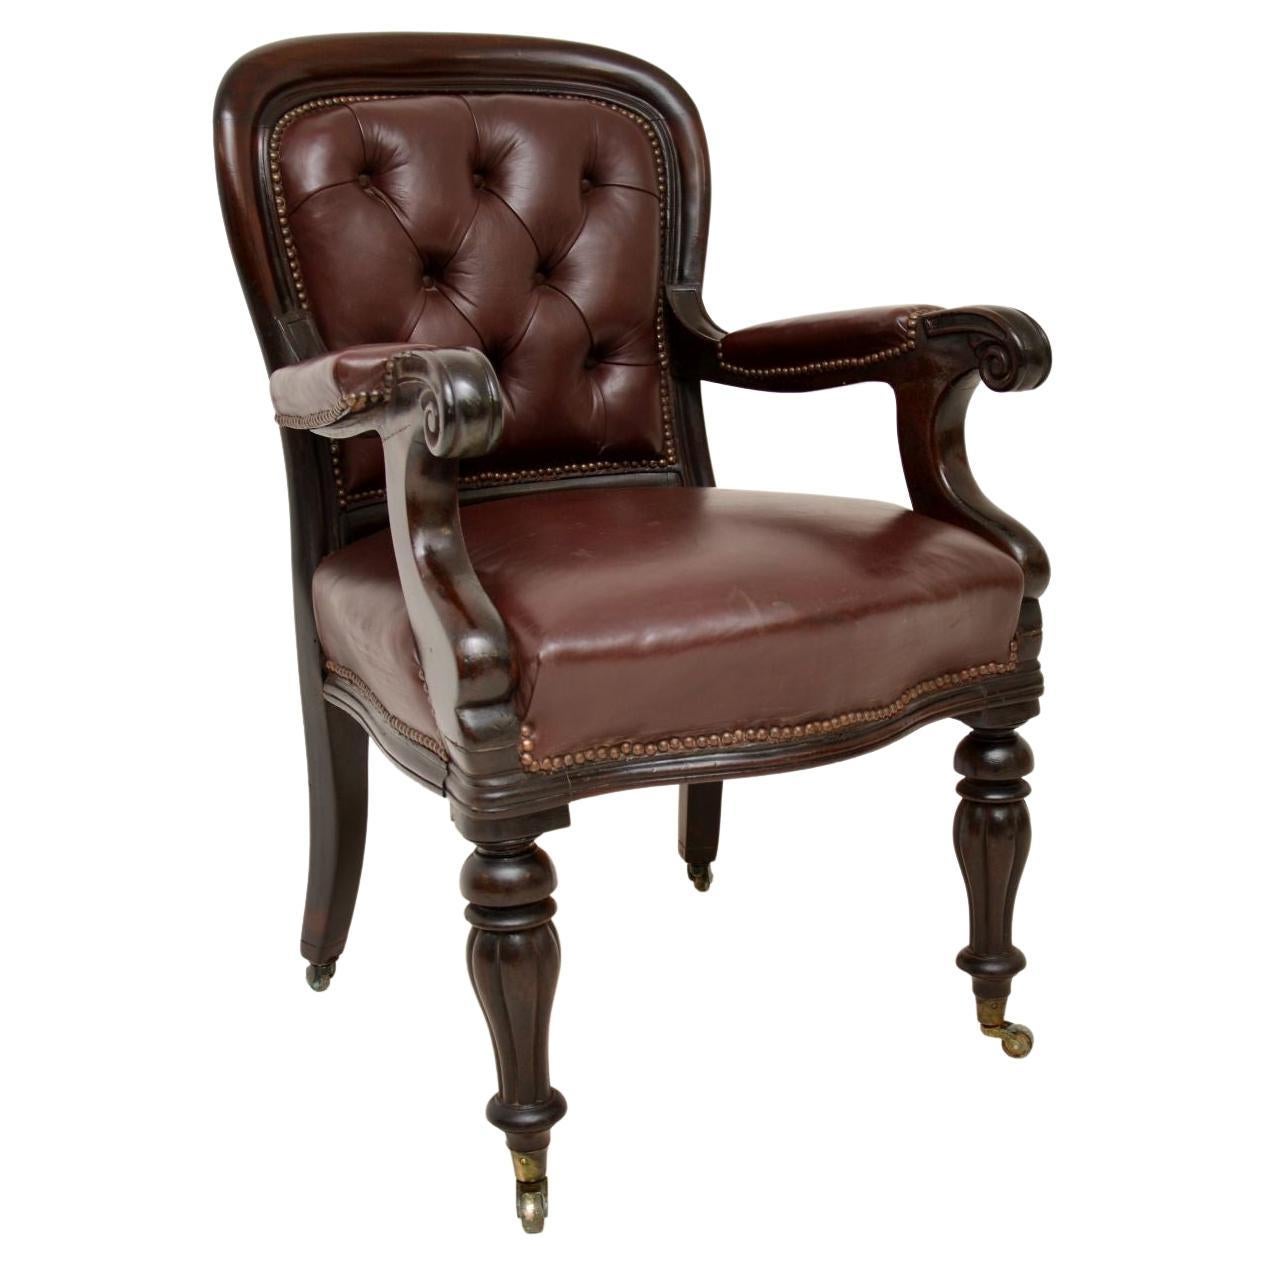 Antique William IV Leather Desk Chair